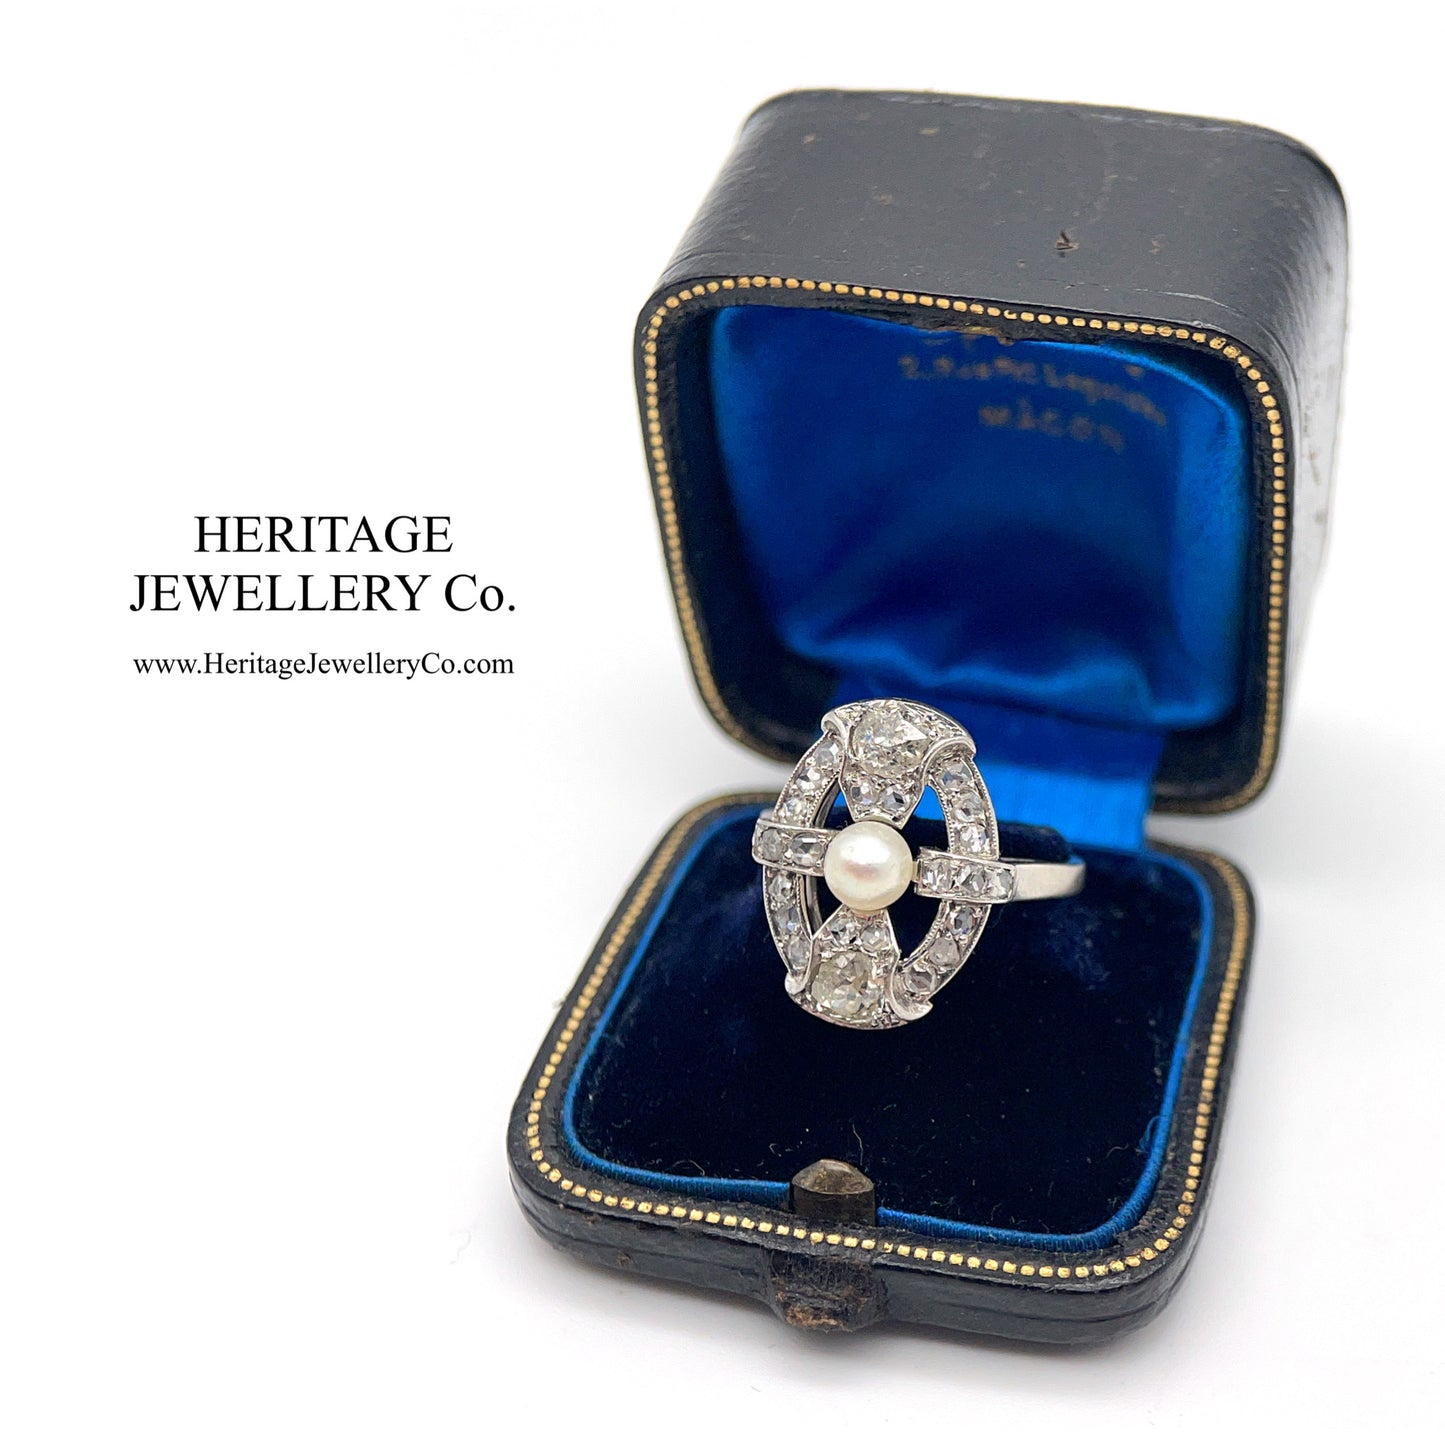 Art Deco Diamond and Pearl Ring